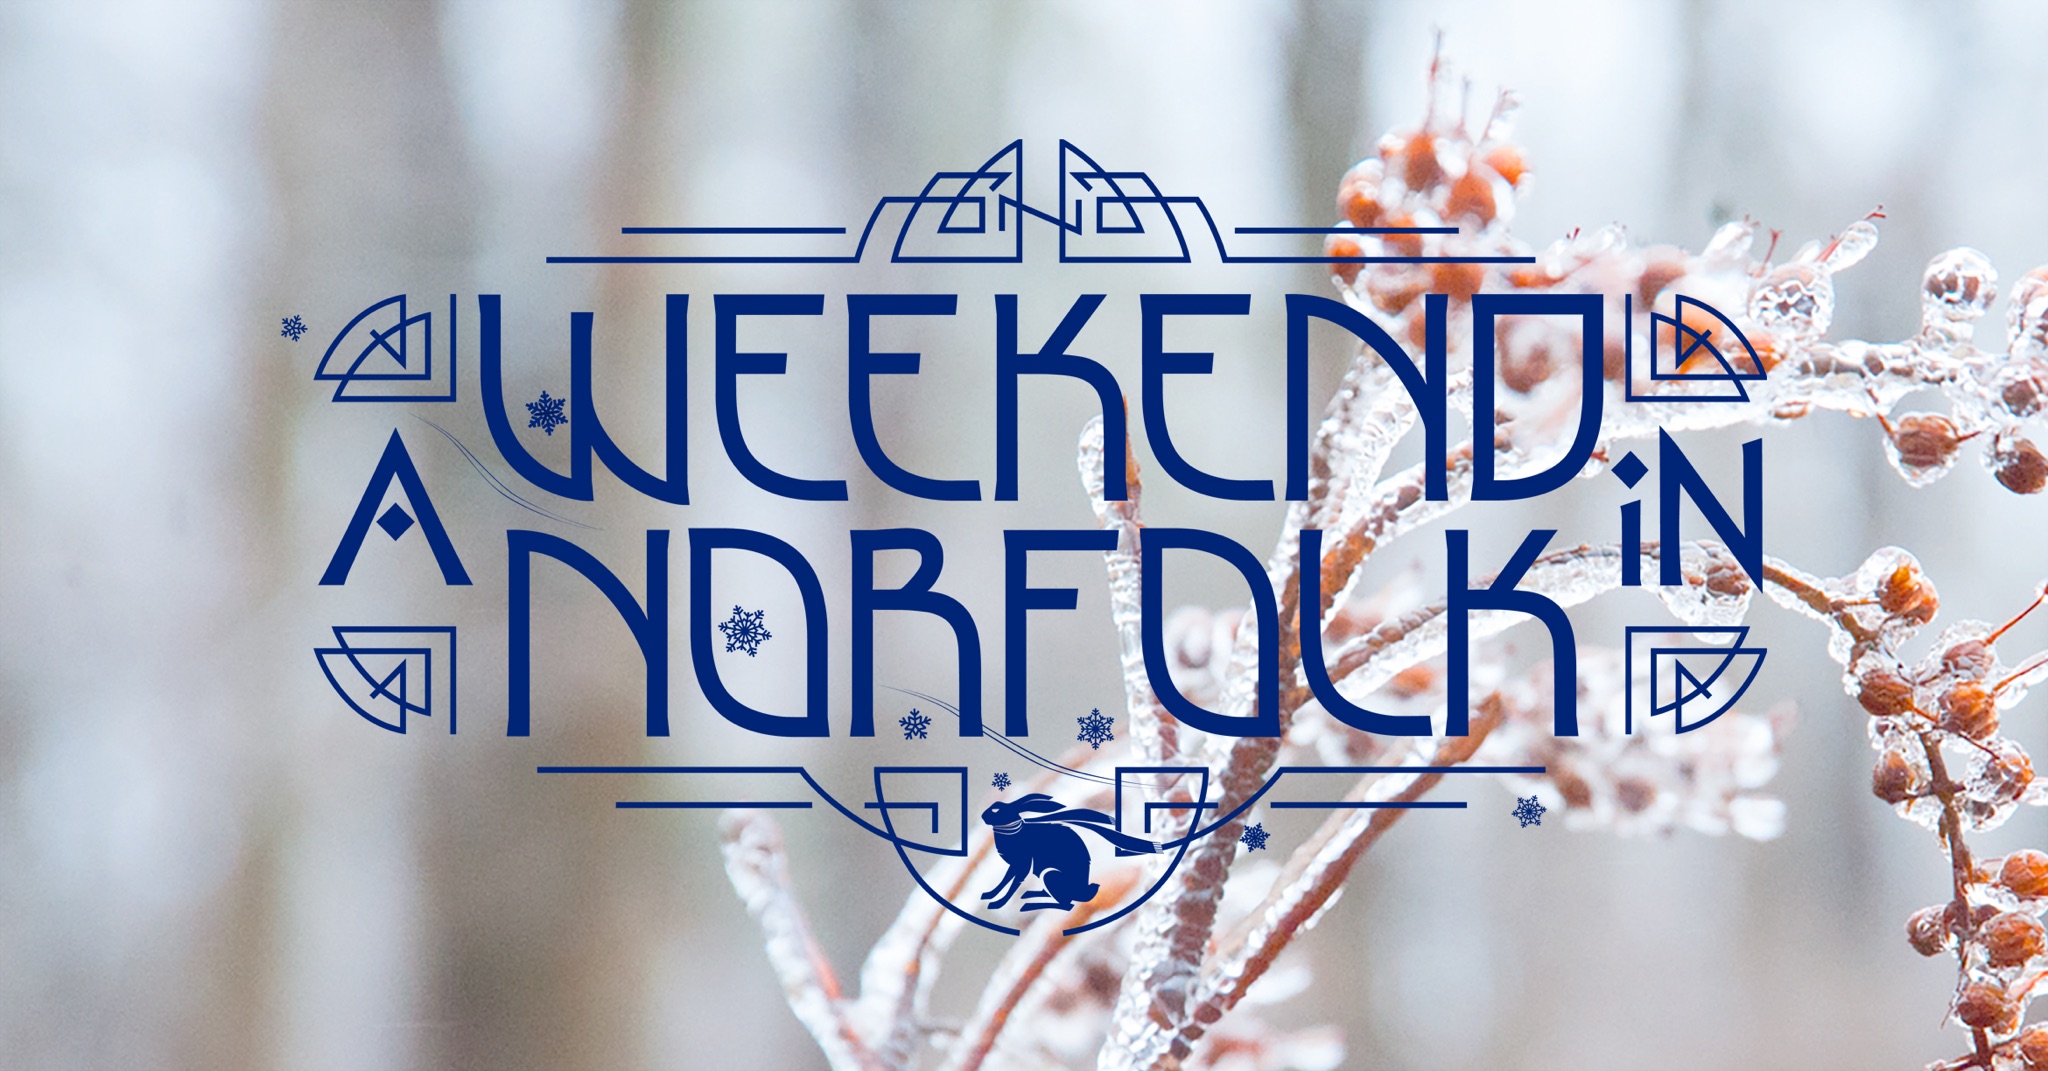 A Weekend in Norfolk